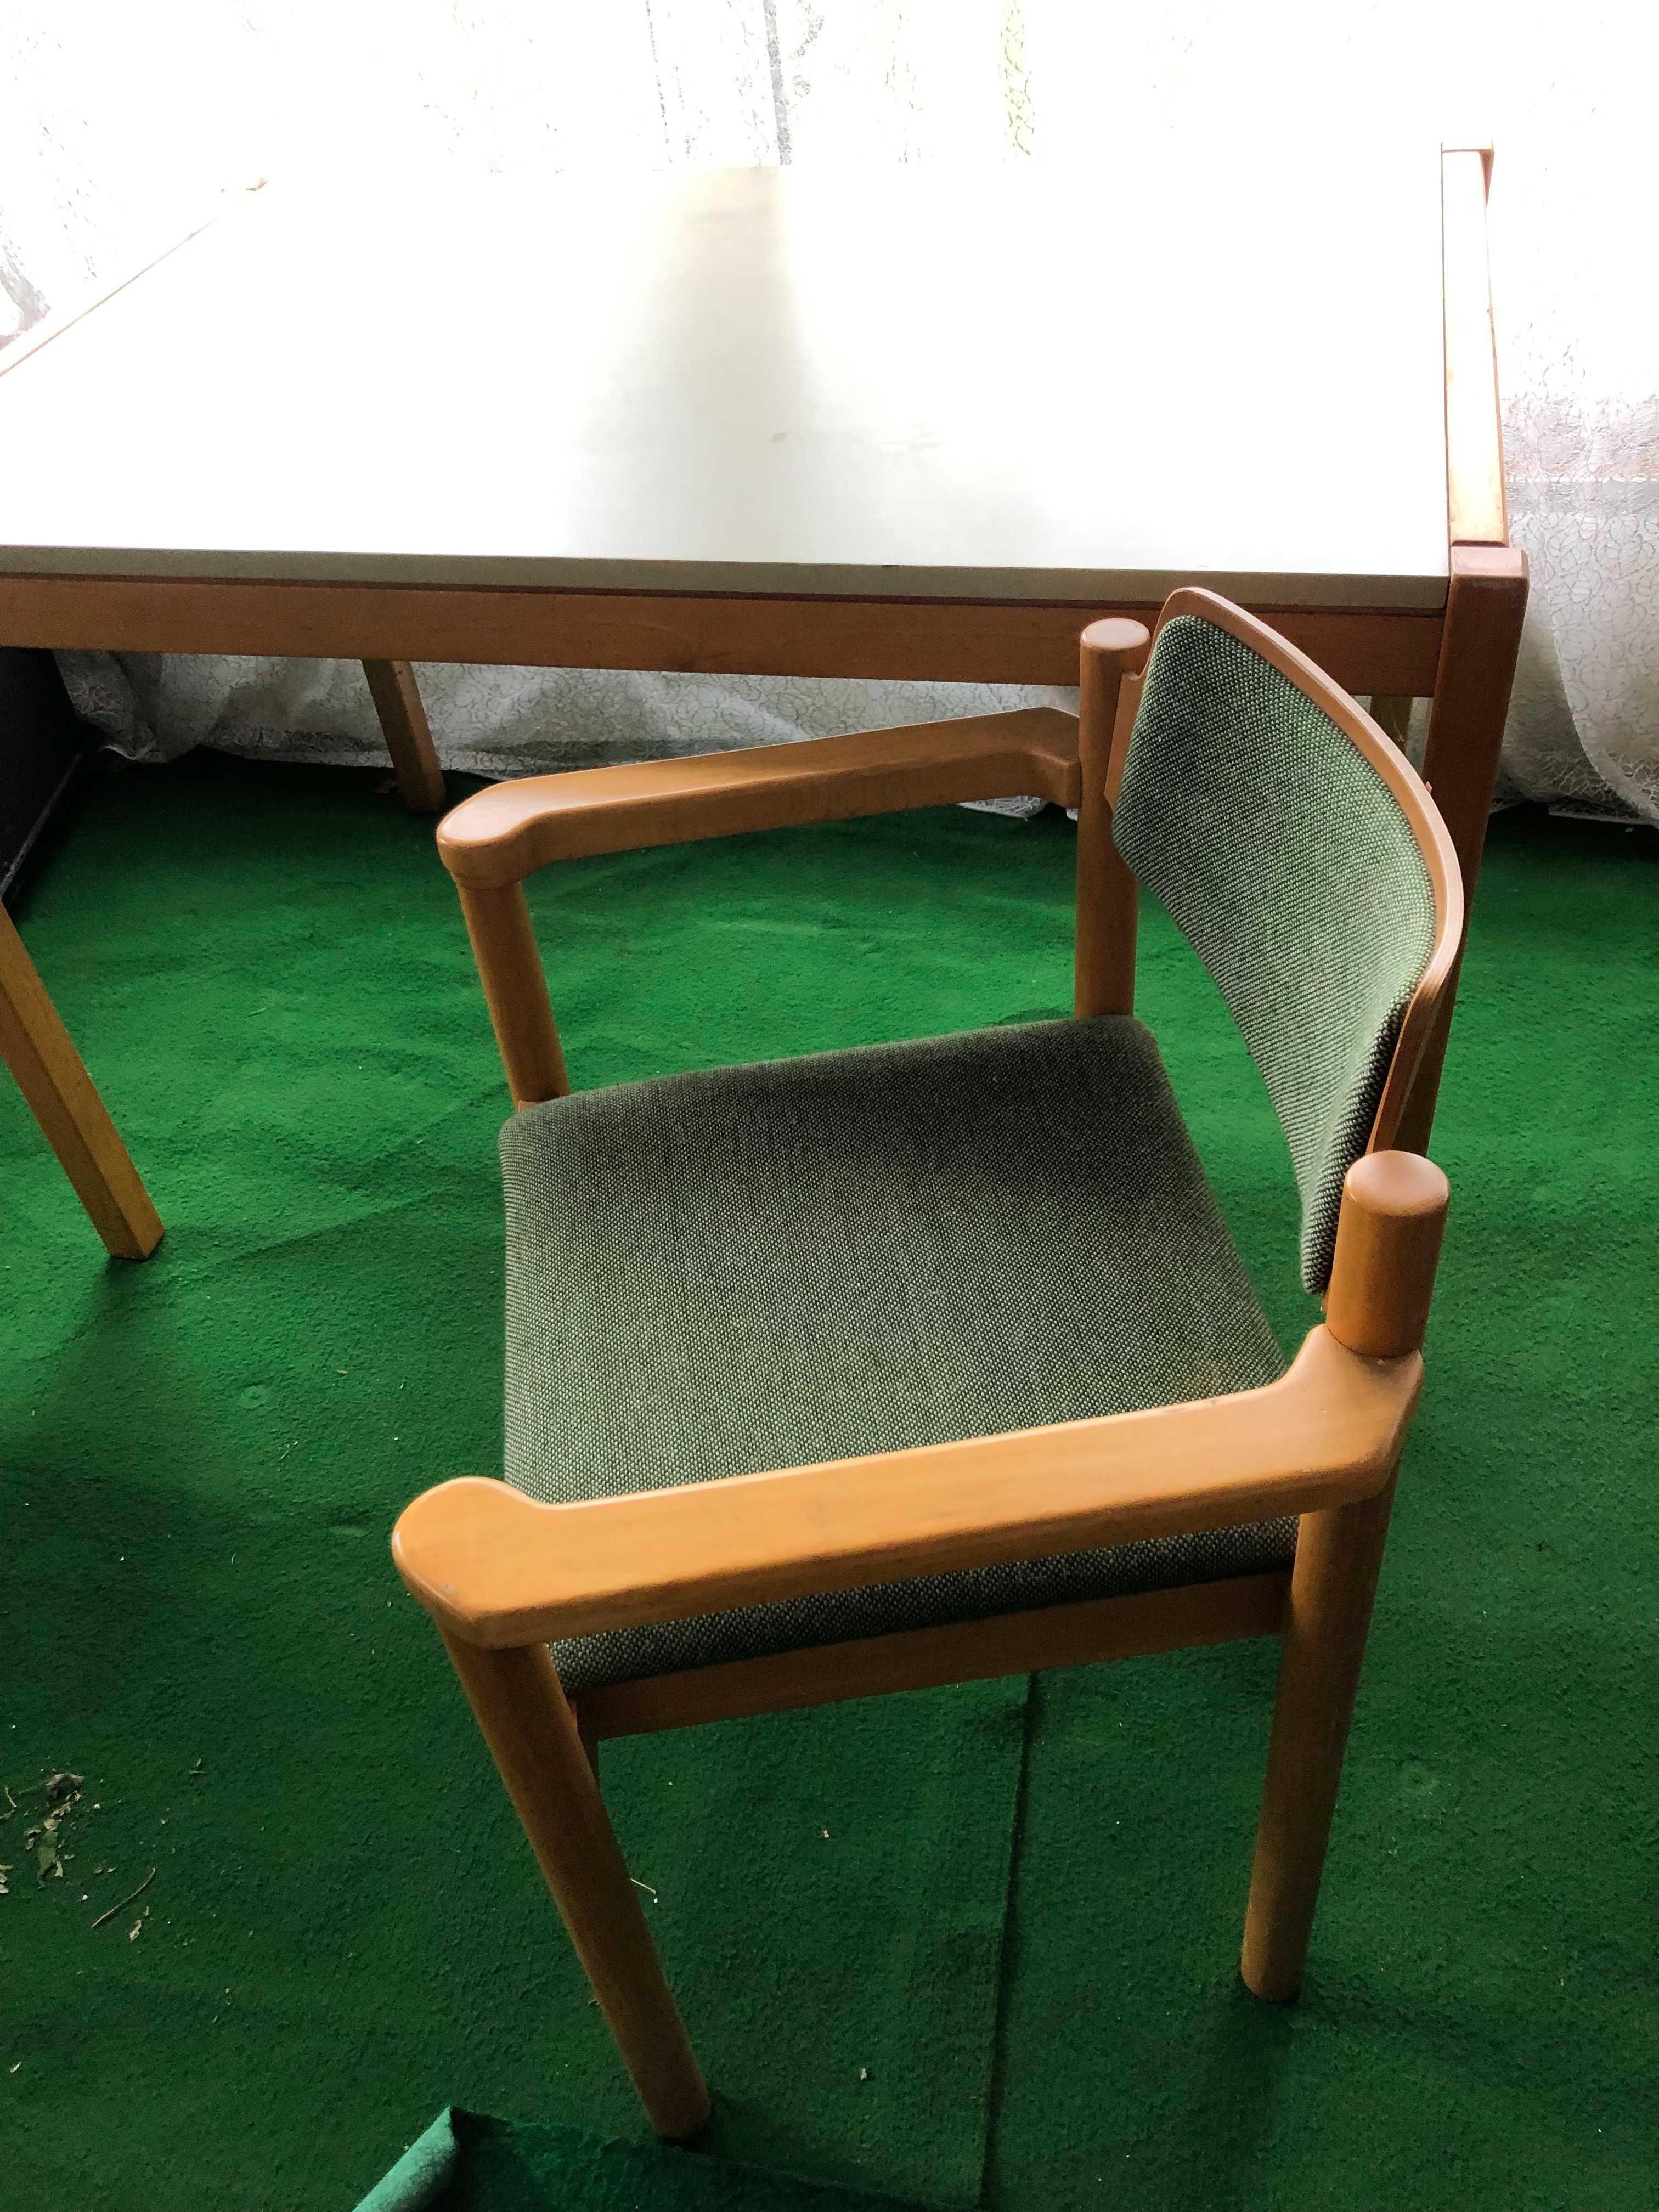 Stol z czterema krzeslami